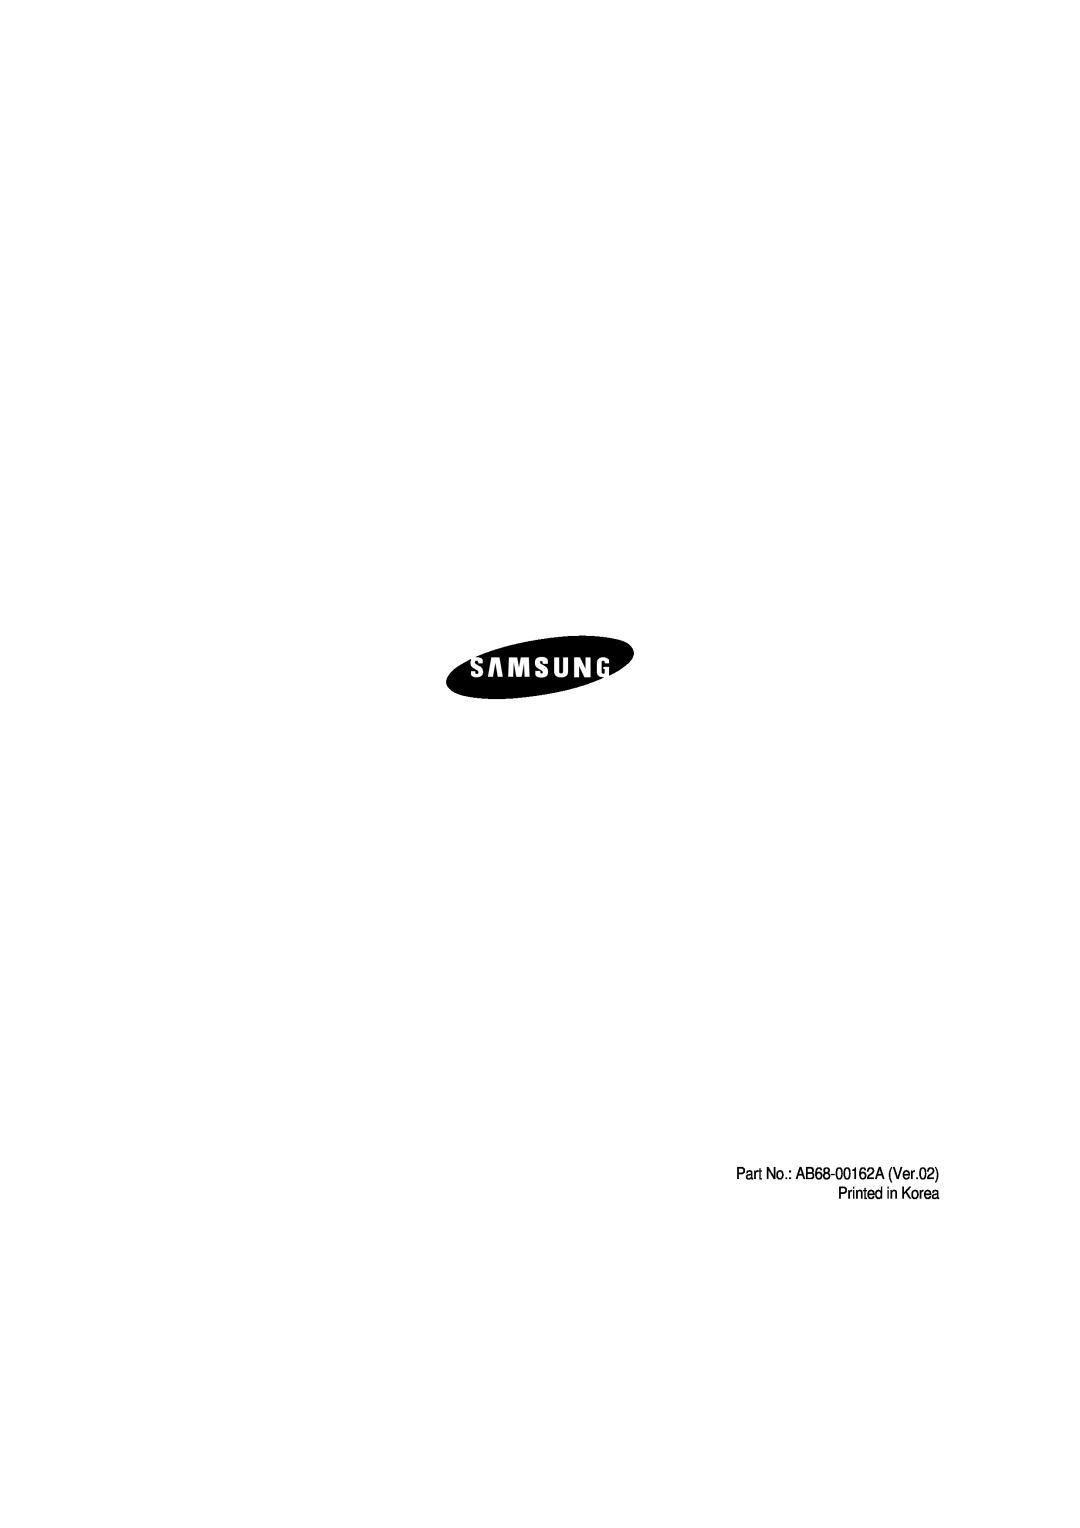 Samsung SMC-210AP manual Part No. AB68-00162A Ver.02 Printed in Korea 